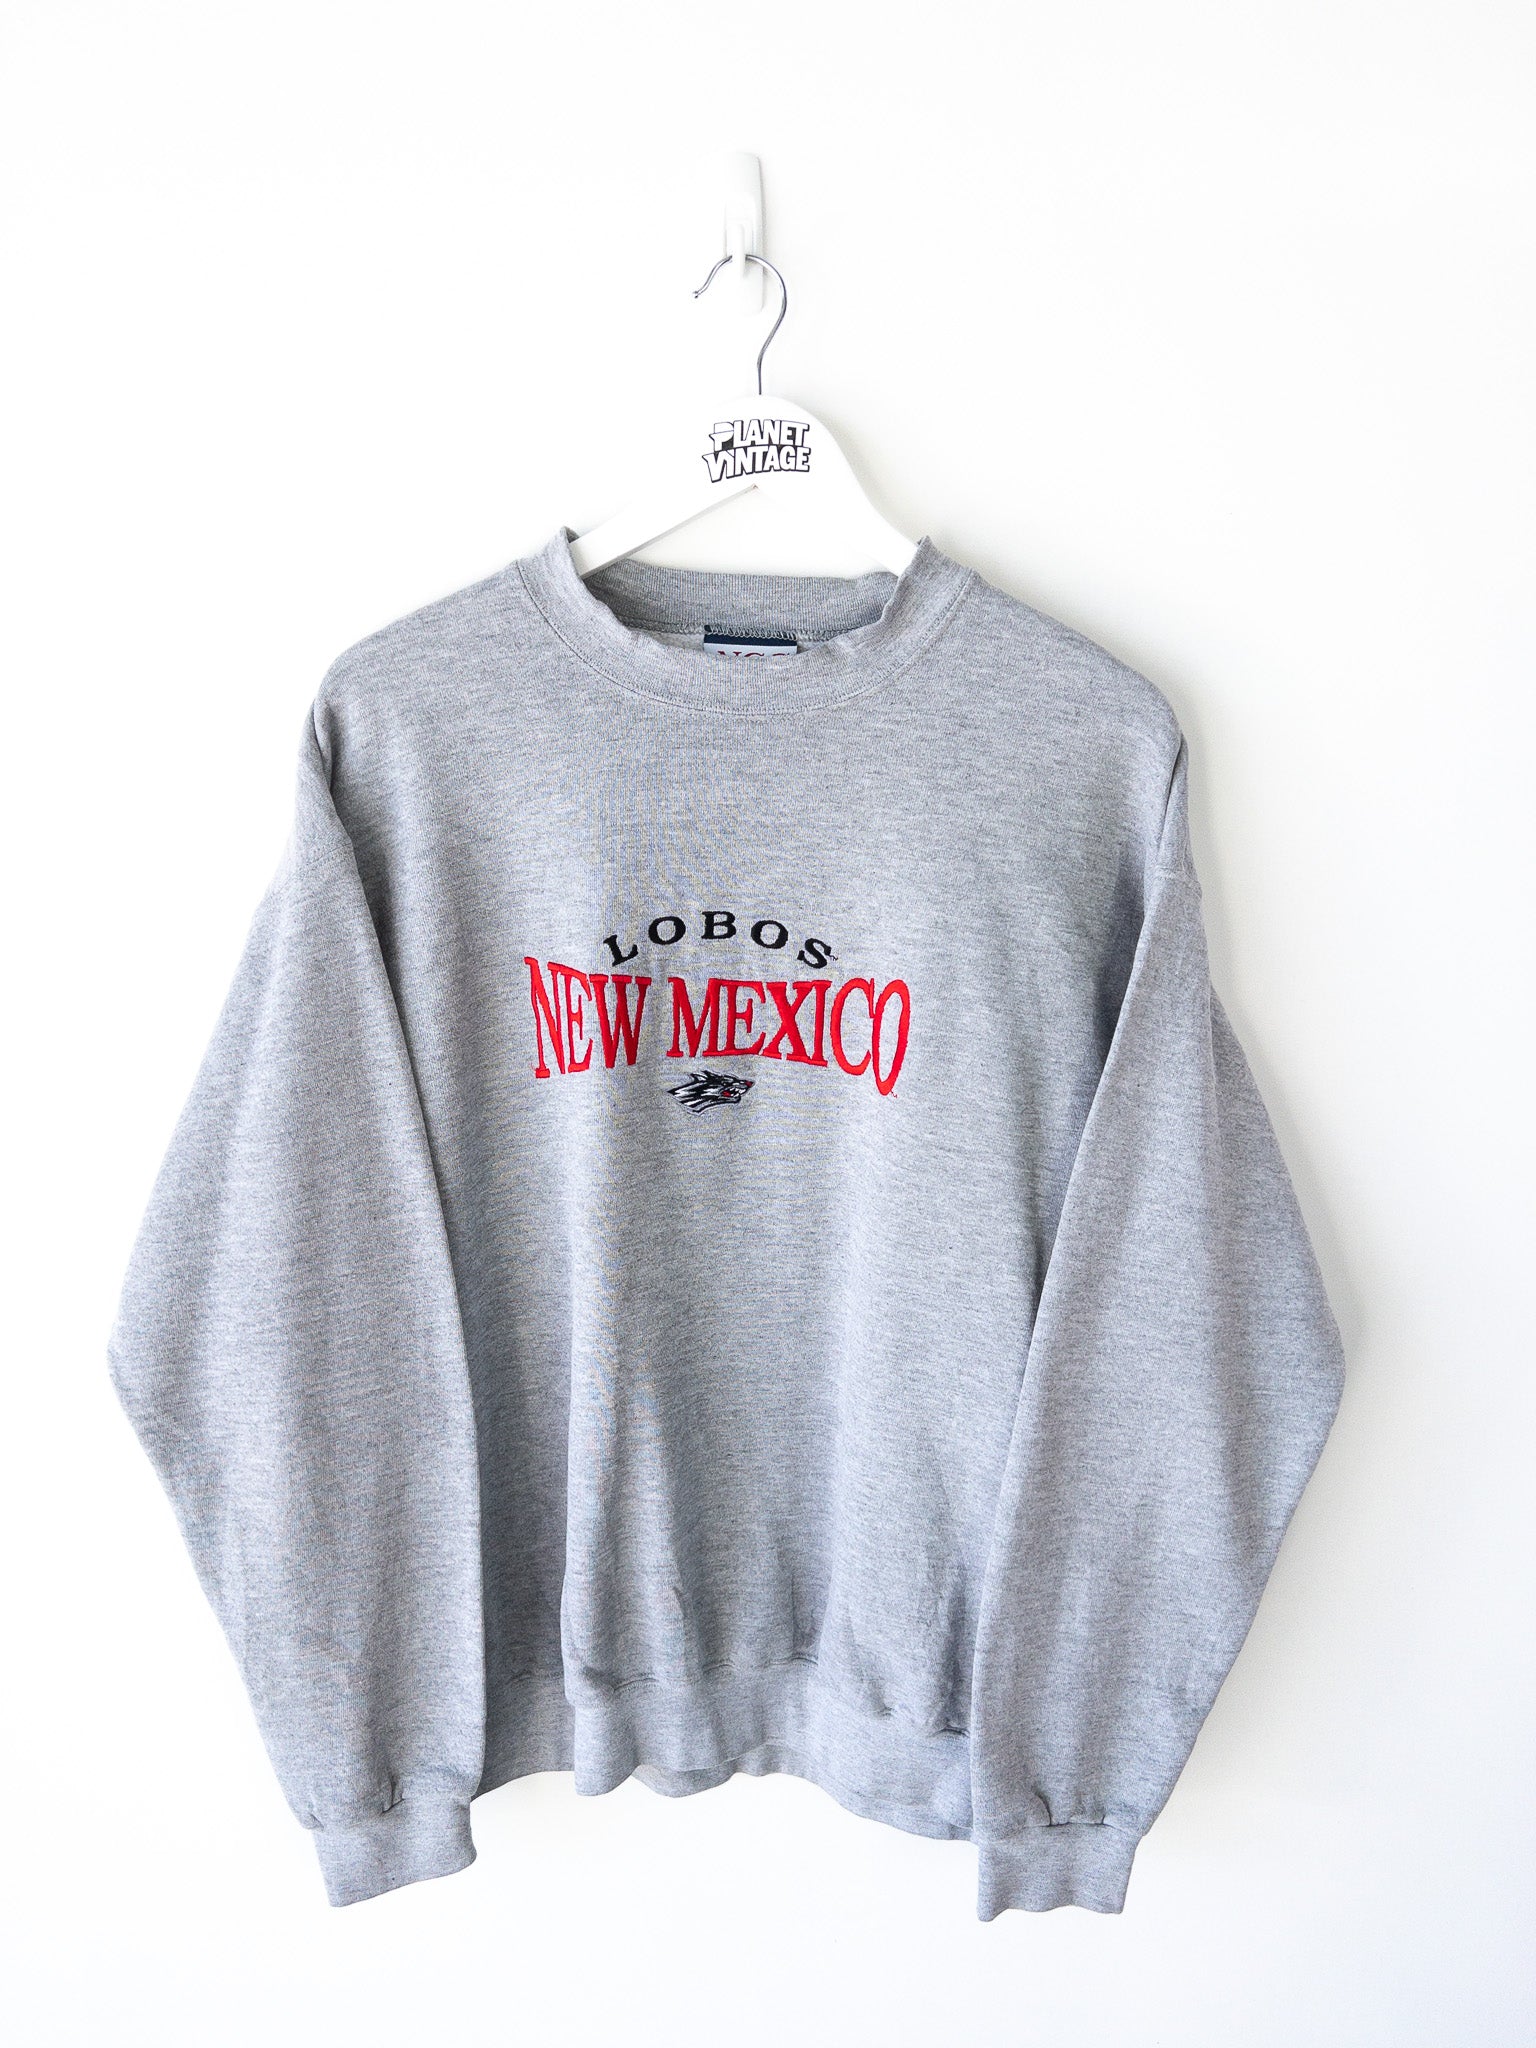 Vintage New Mexico Lobos Sweatshirt (XL)